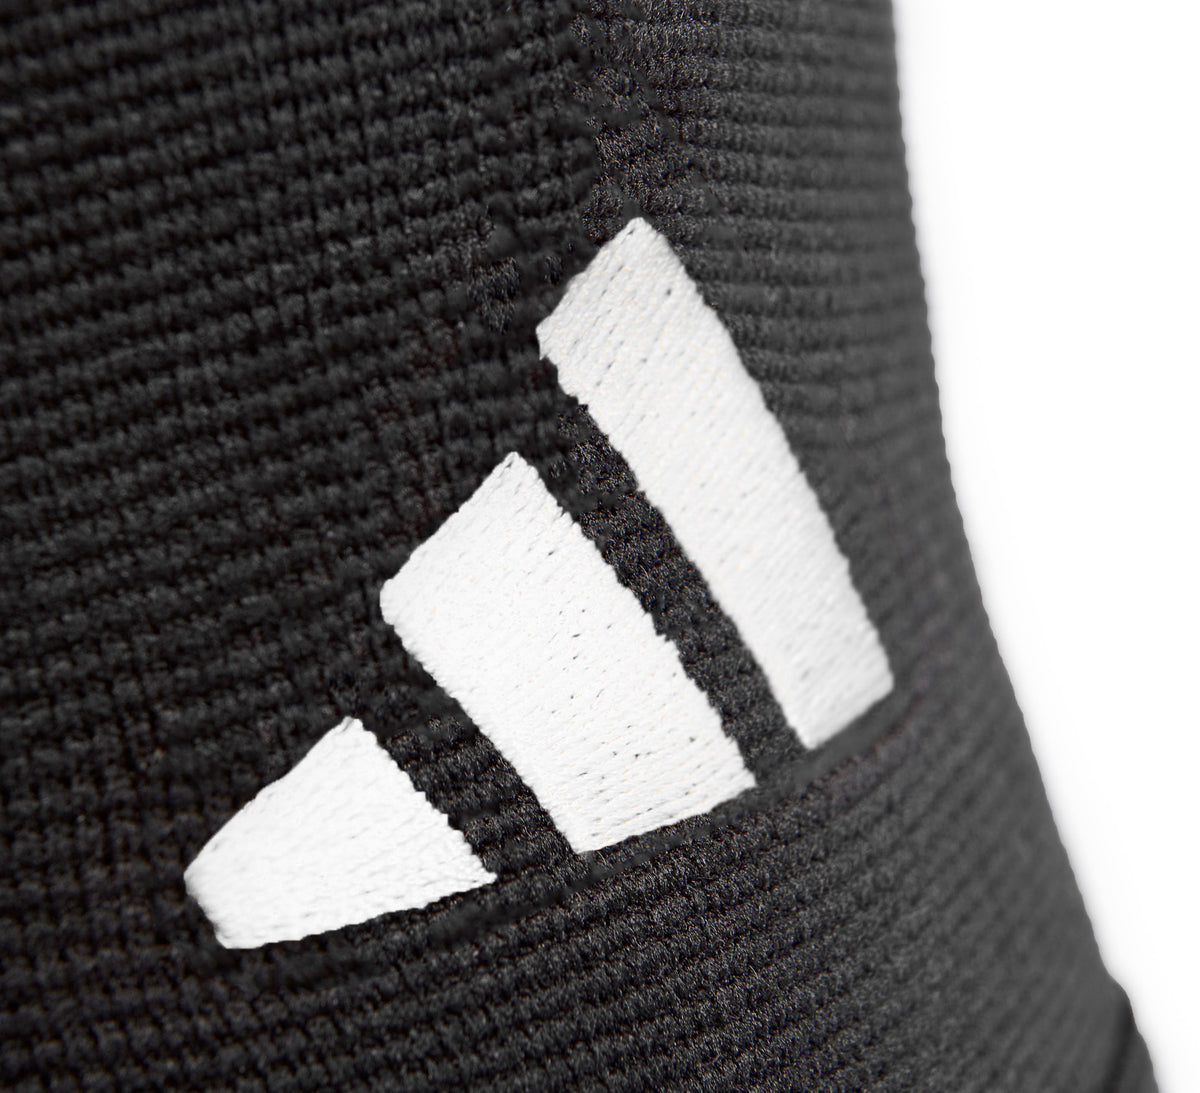 Adidas Compression Calf Sleeves